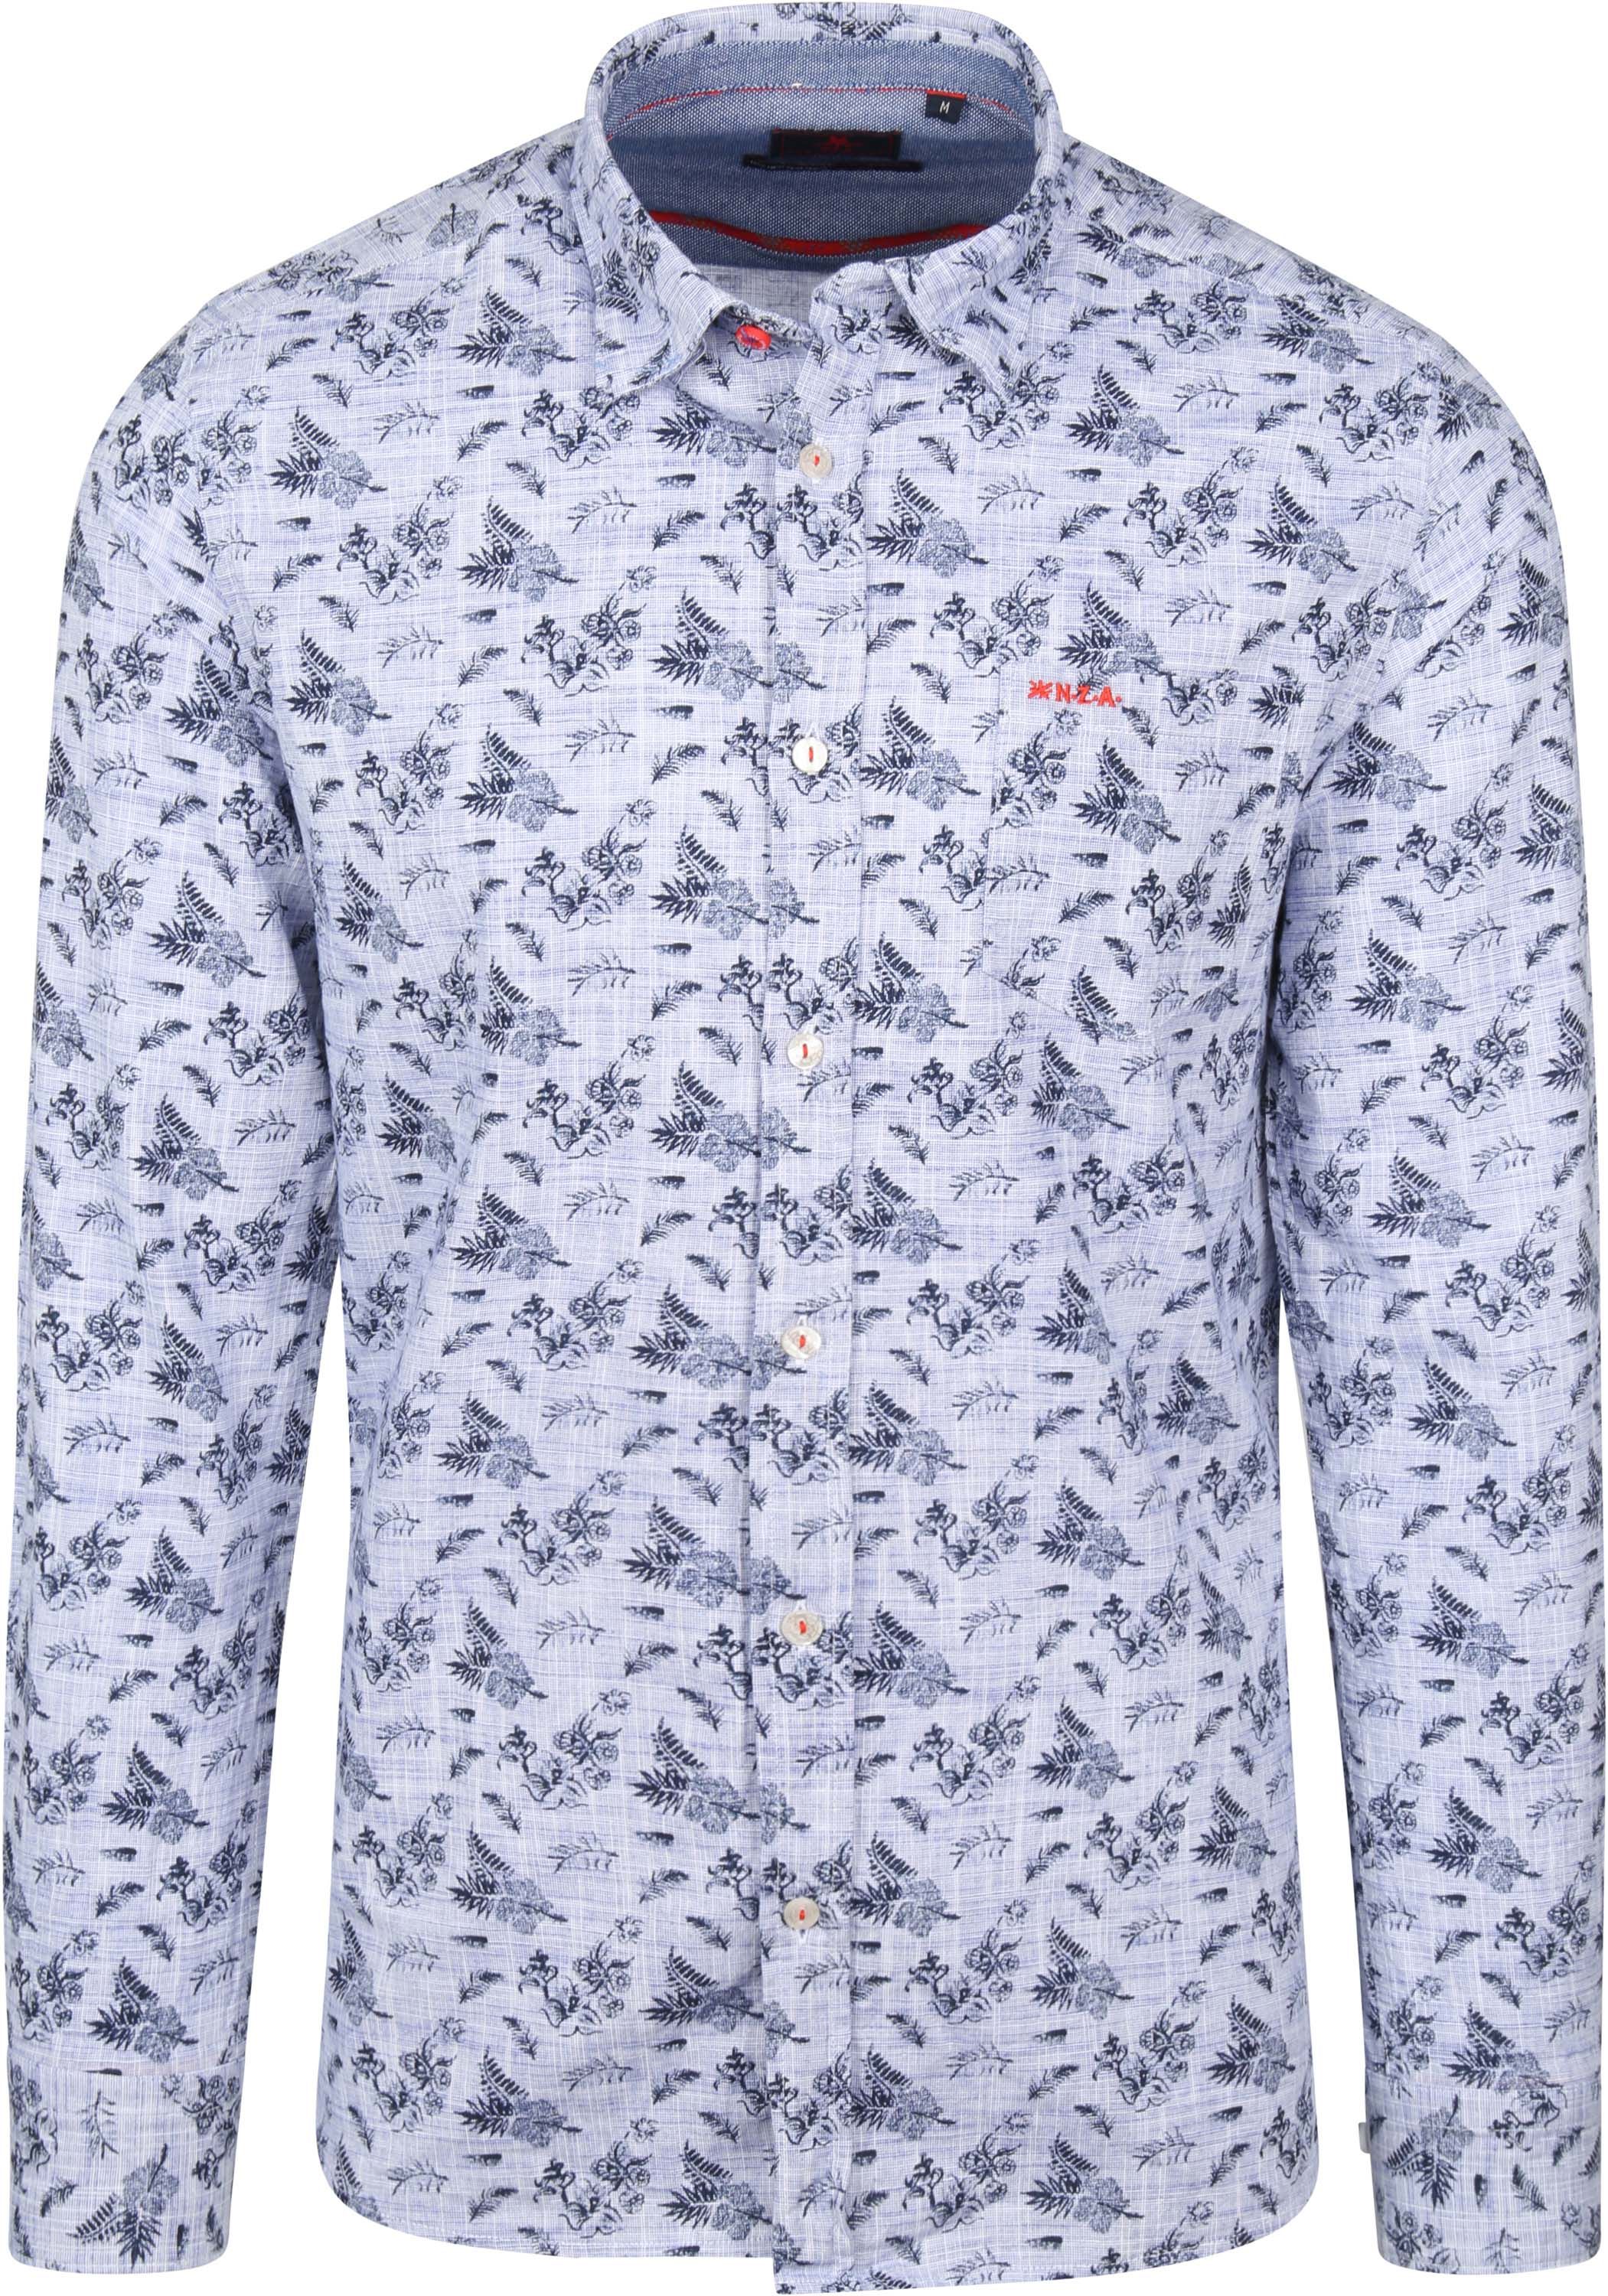 New Zealand Auckland - Nza shirt rolleston floral print light blue blue size 3xl